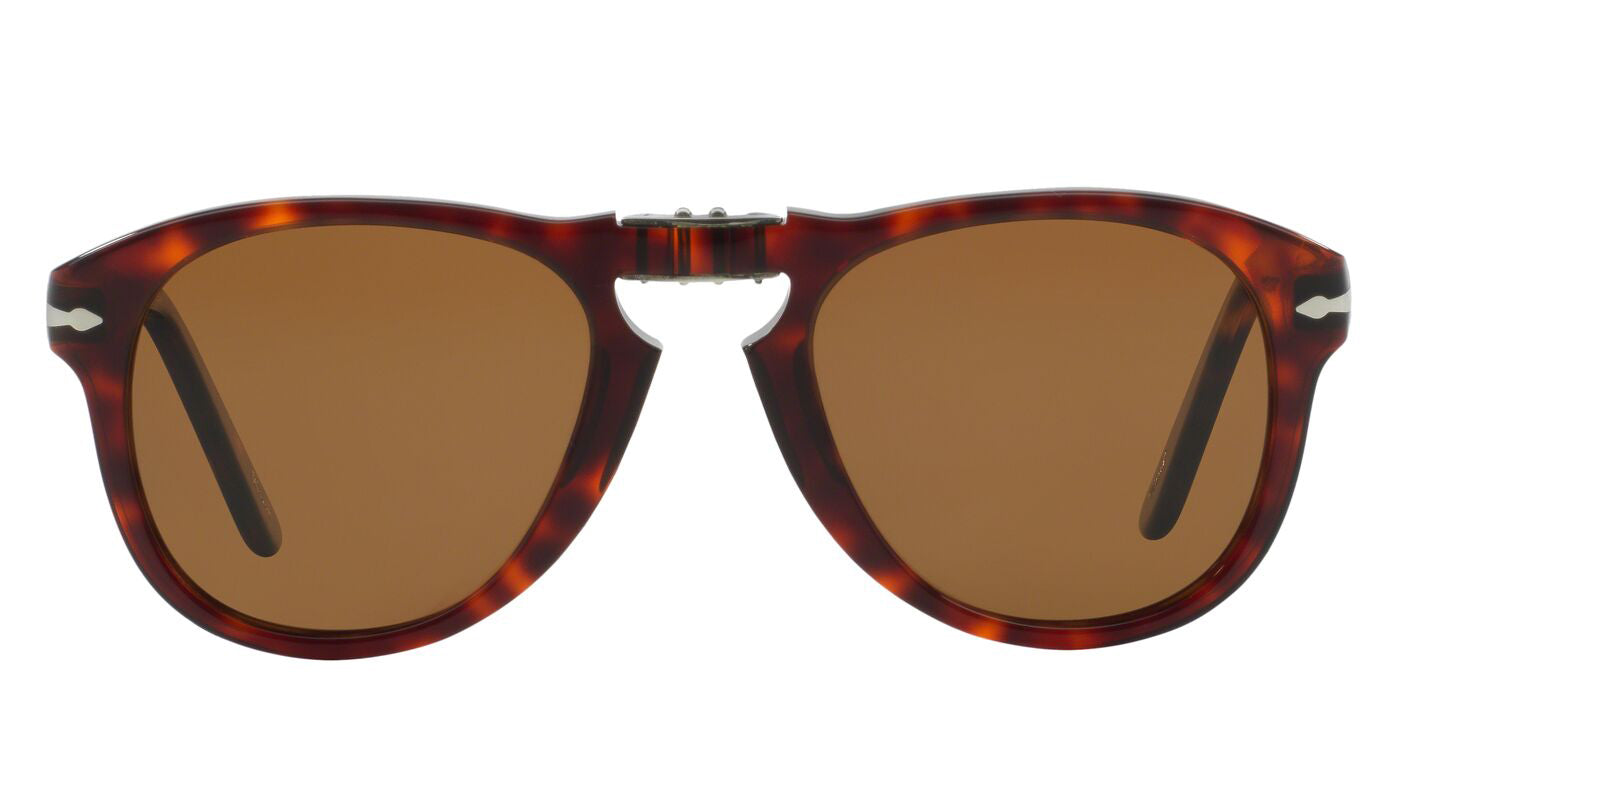 Persol Folding Polarized Keyhole Sunglasses - Brown